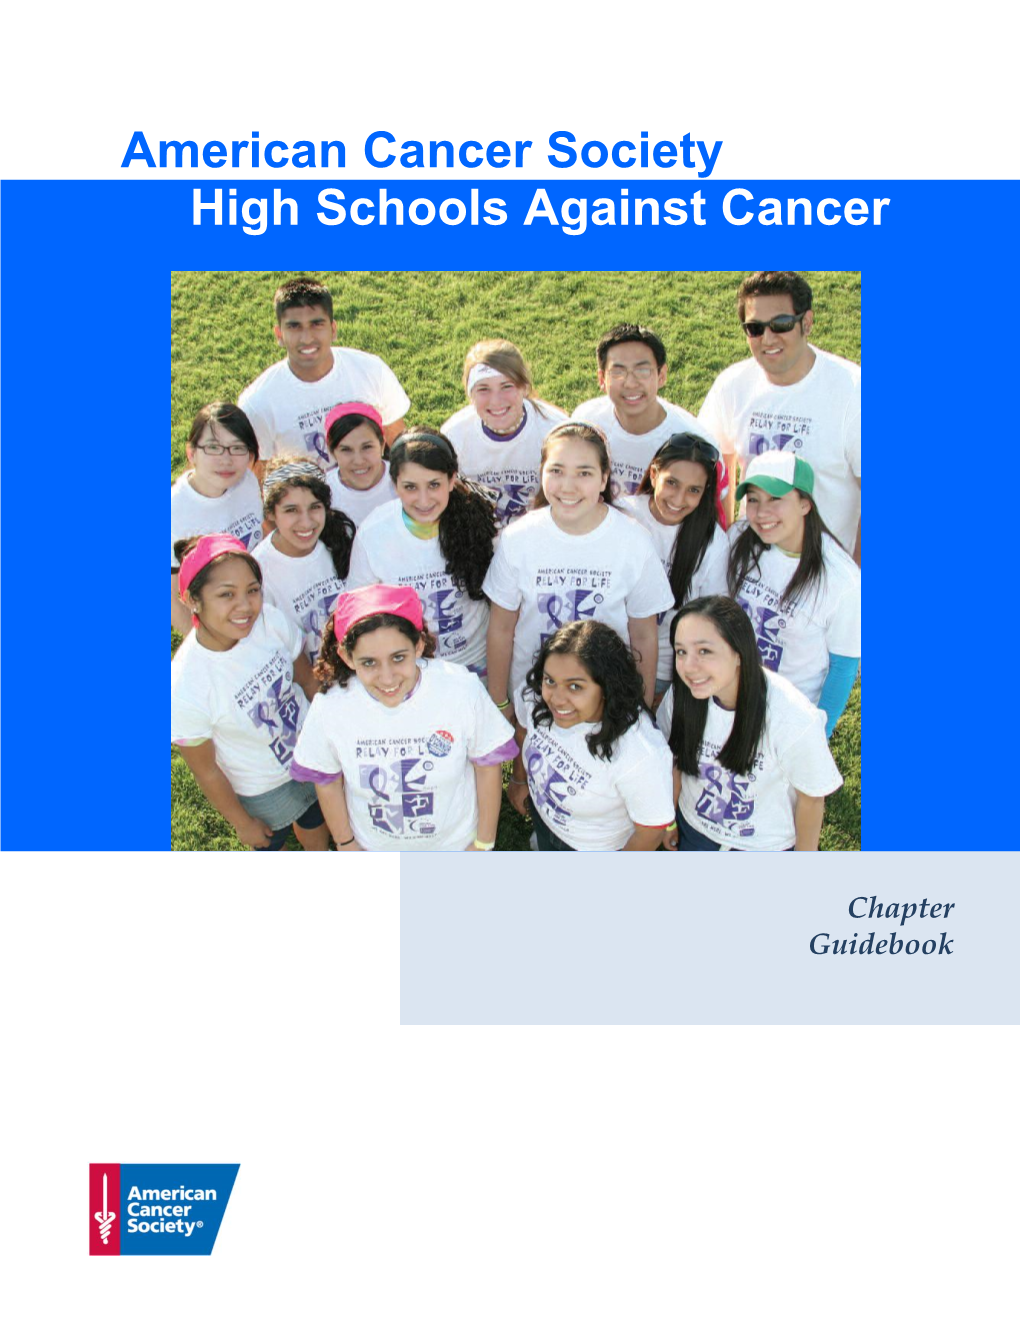 American Cancer Society High Schools Against Cancer